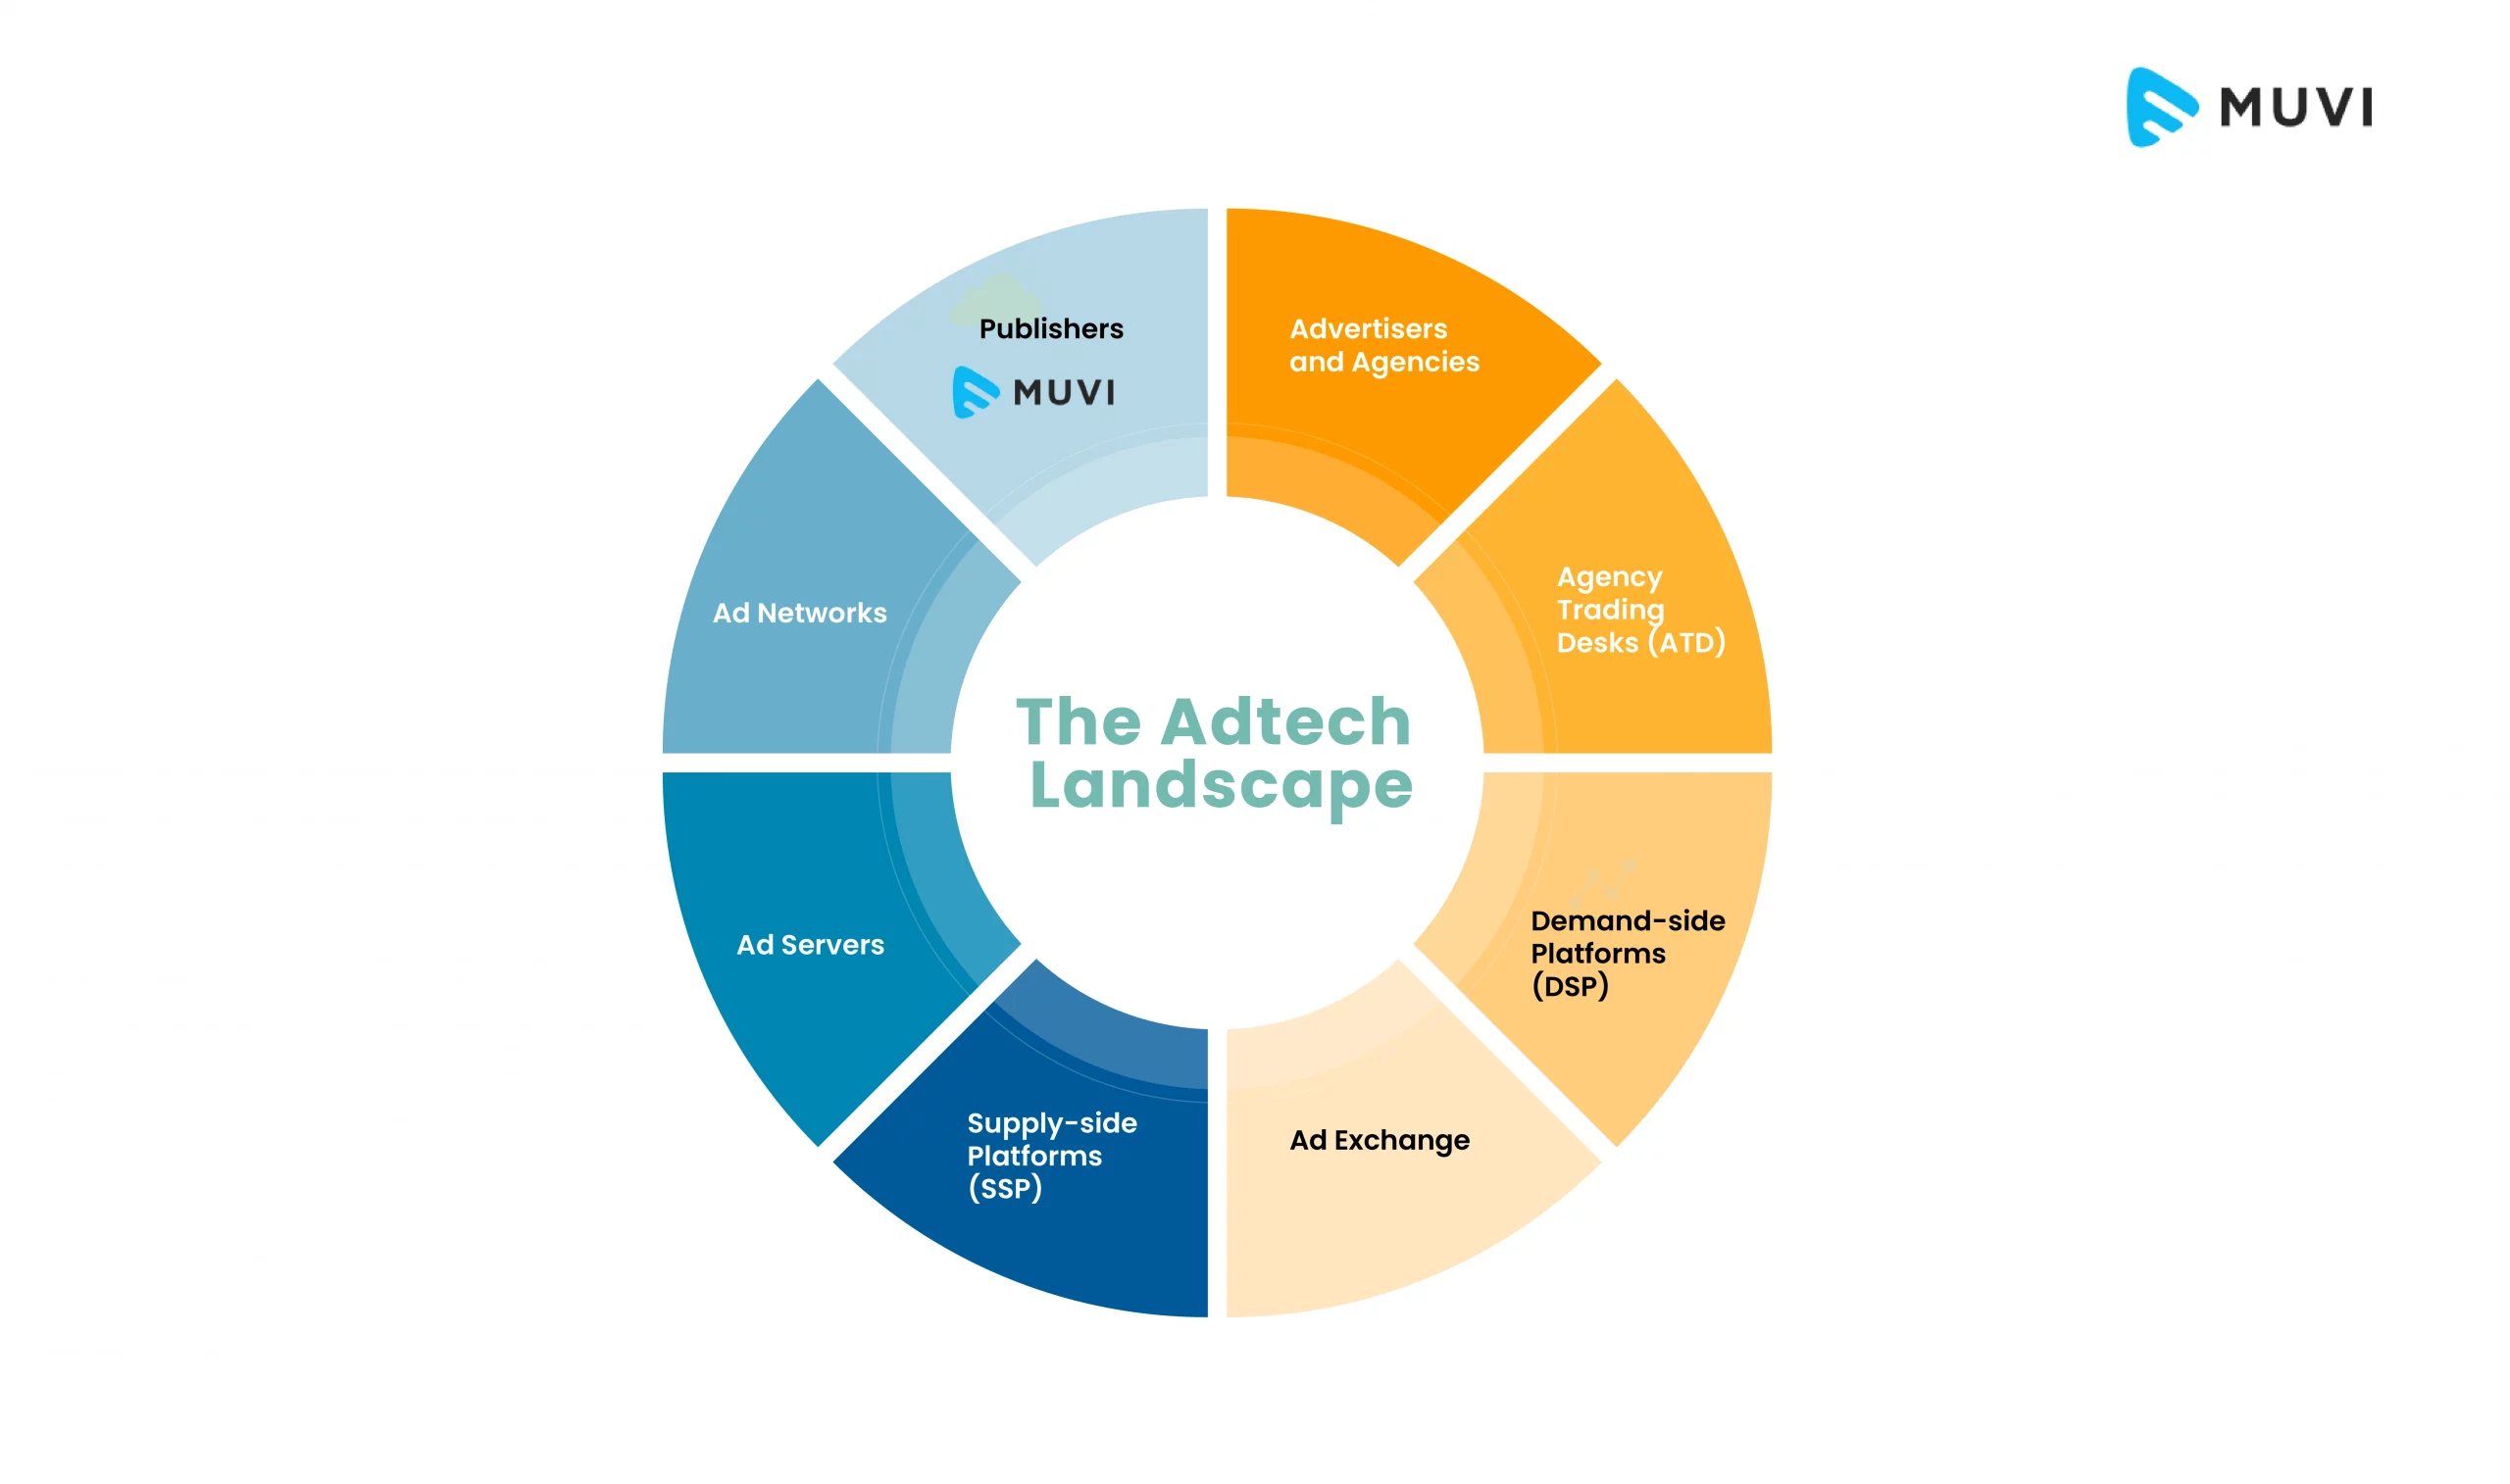 The Adtech Landscape